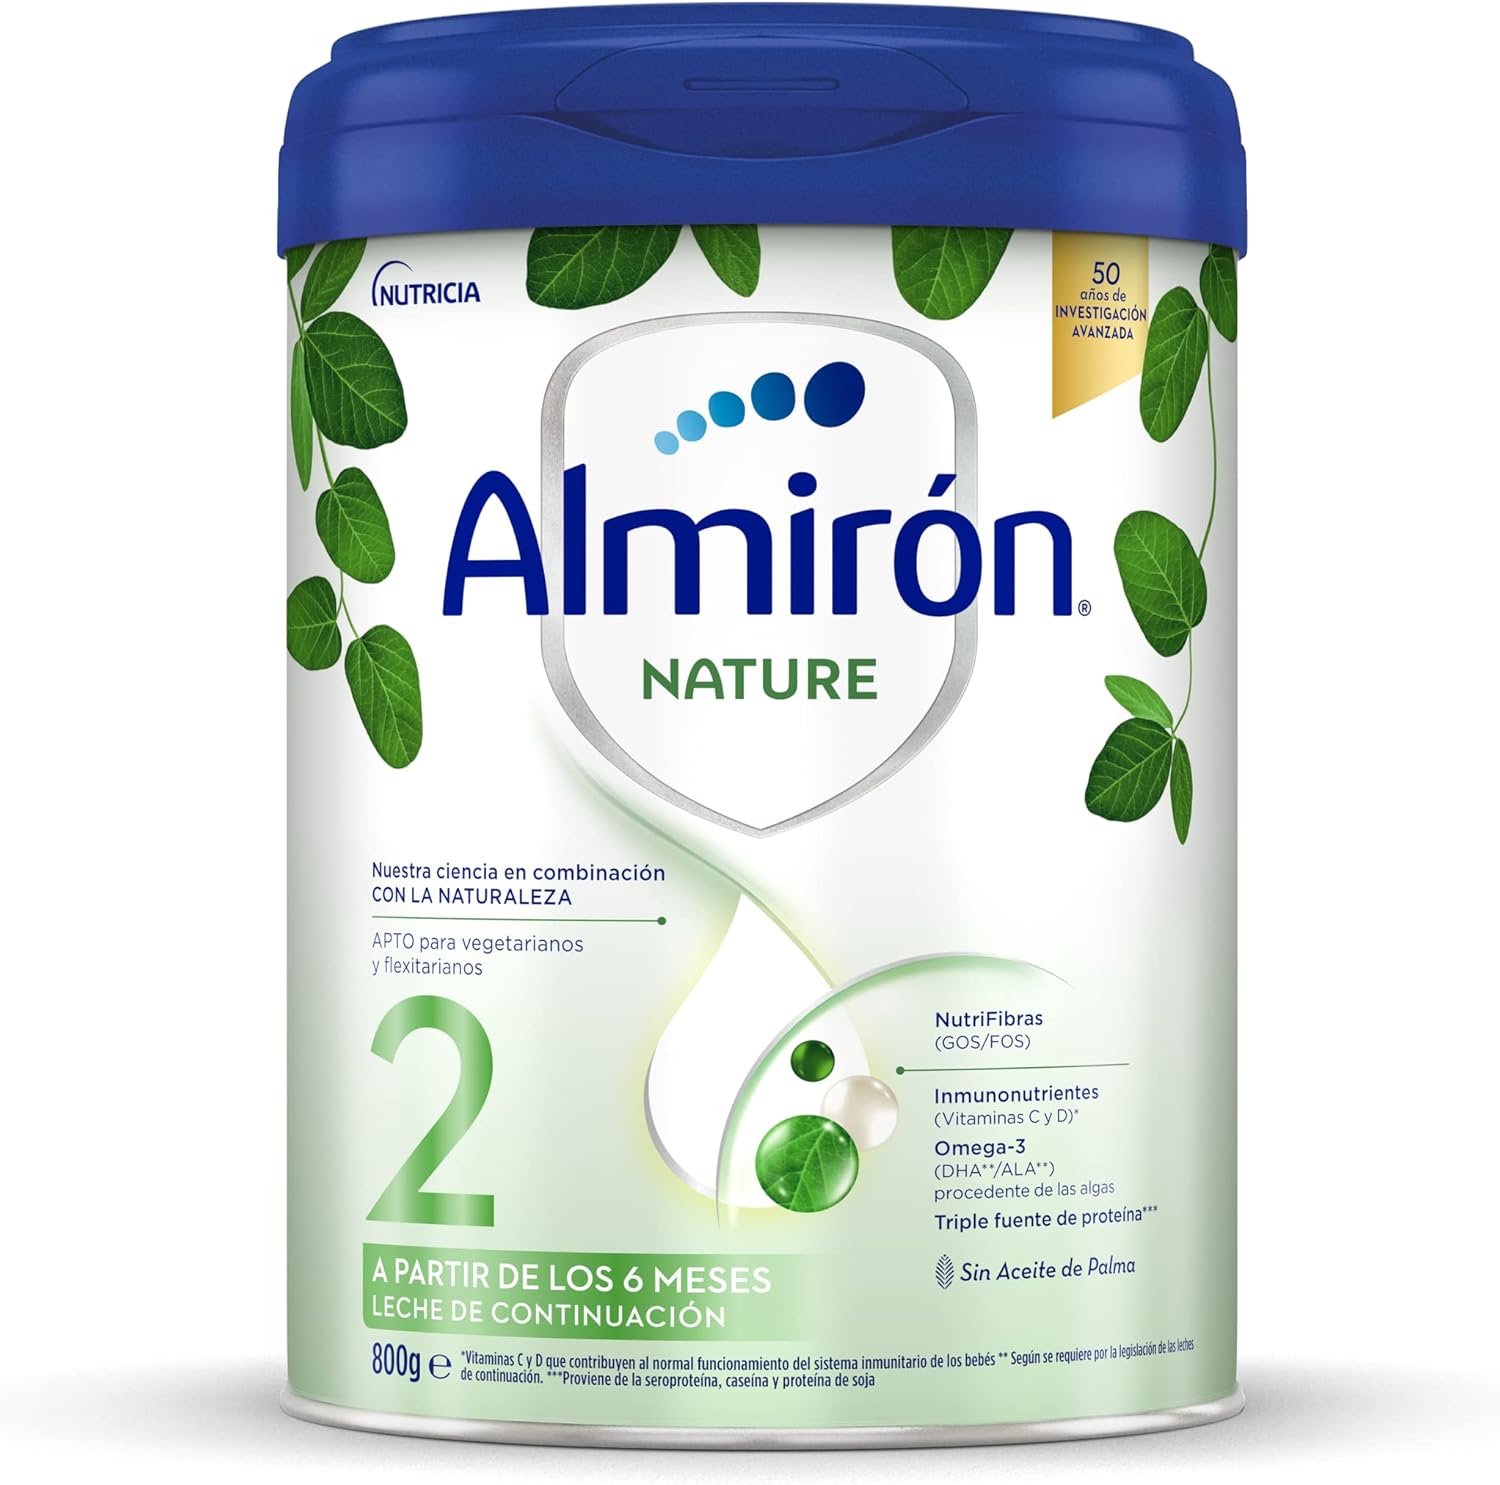 Almiron Nature 2 Follow-on Milk Powder, from 6 months, 800g